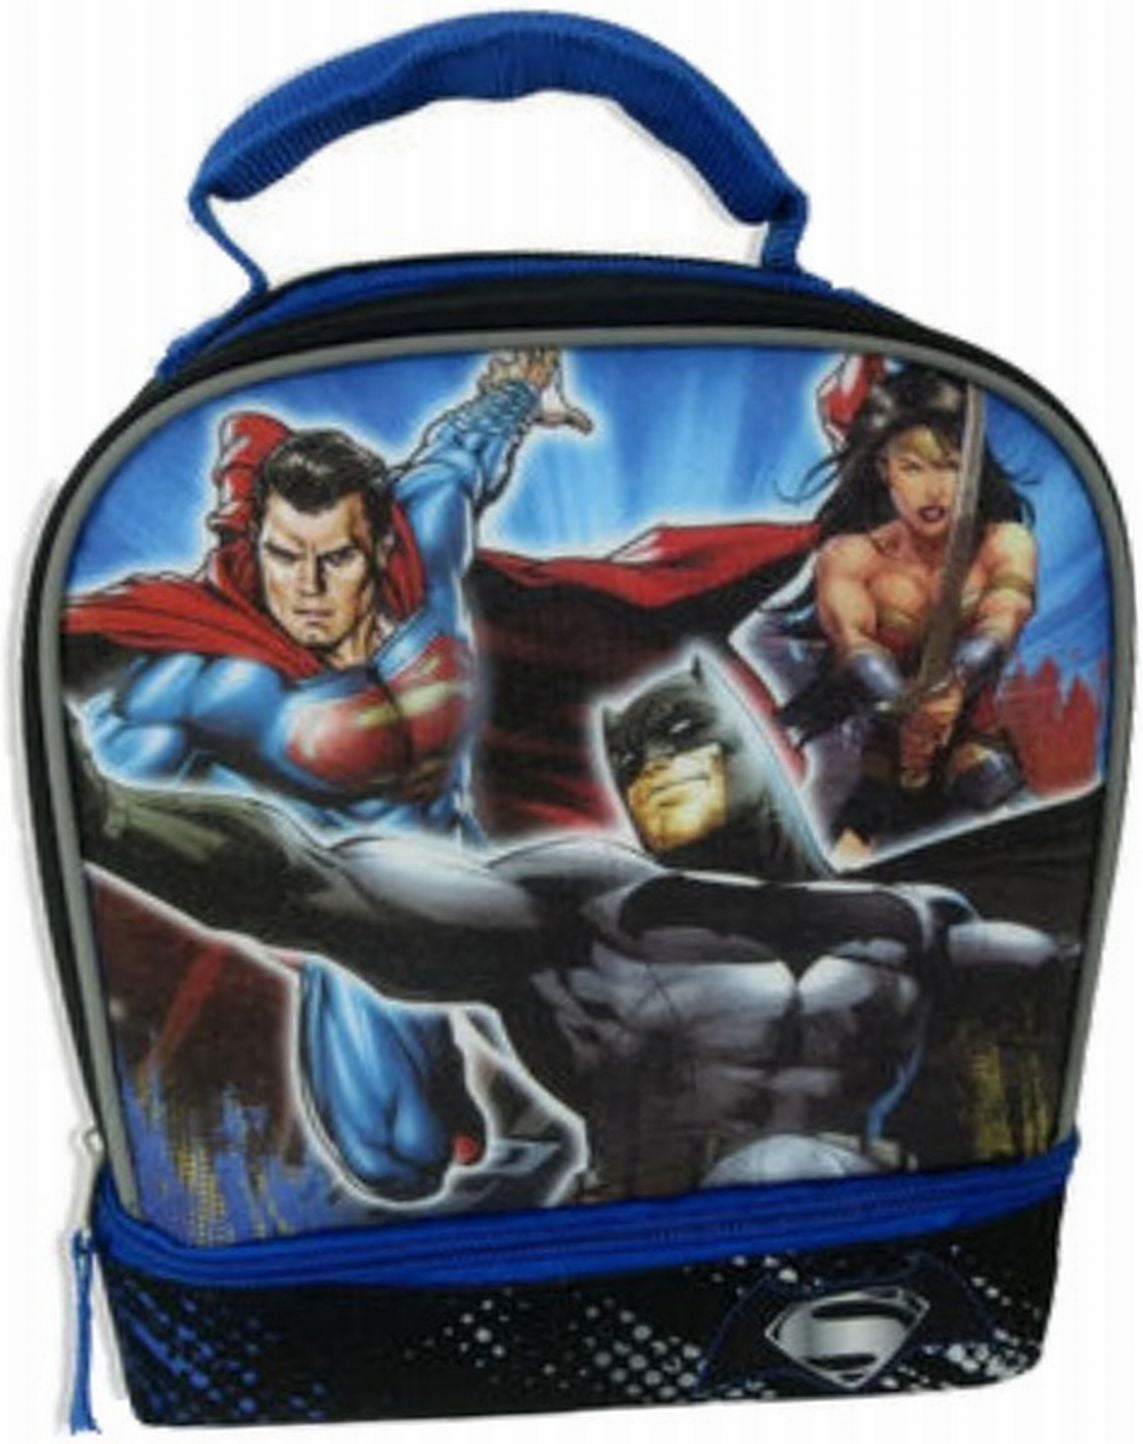 Justice League Dual Lunch Box Bag Kit Suoer Hero Batman Superman Iron man Boys 